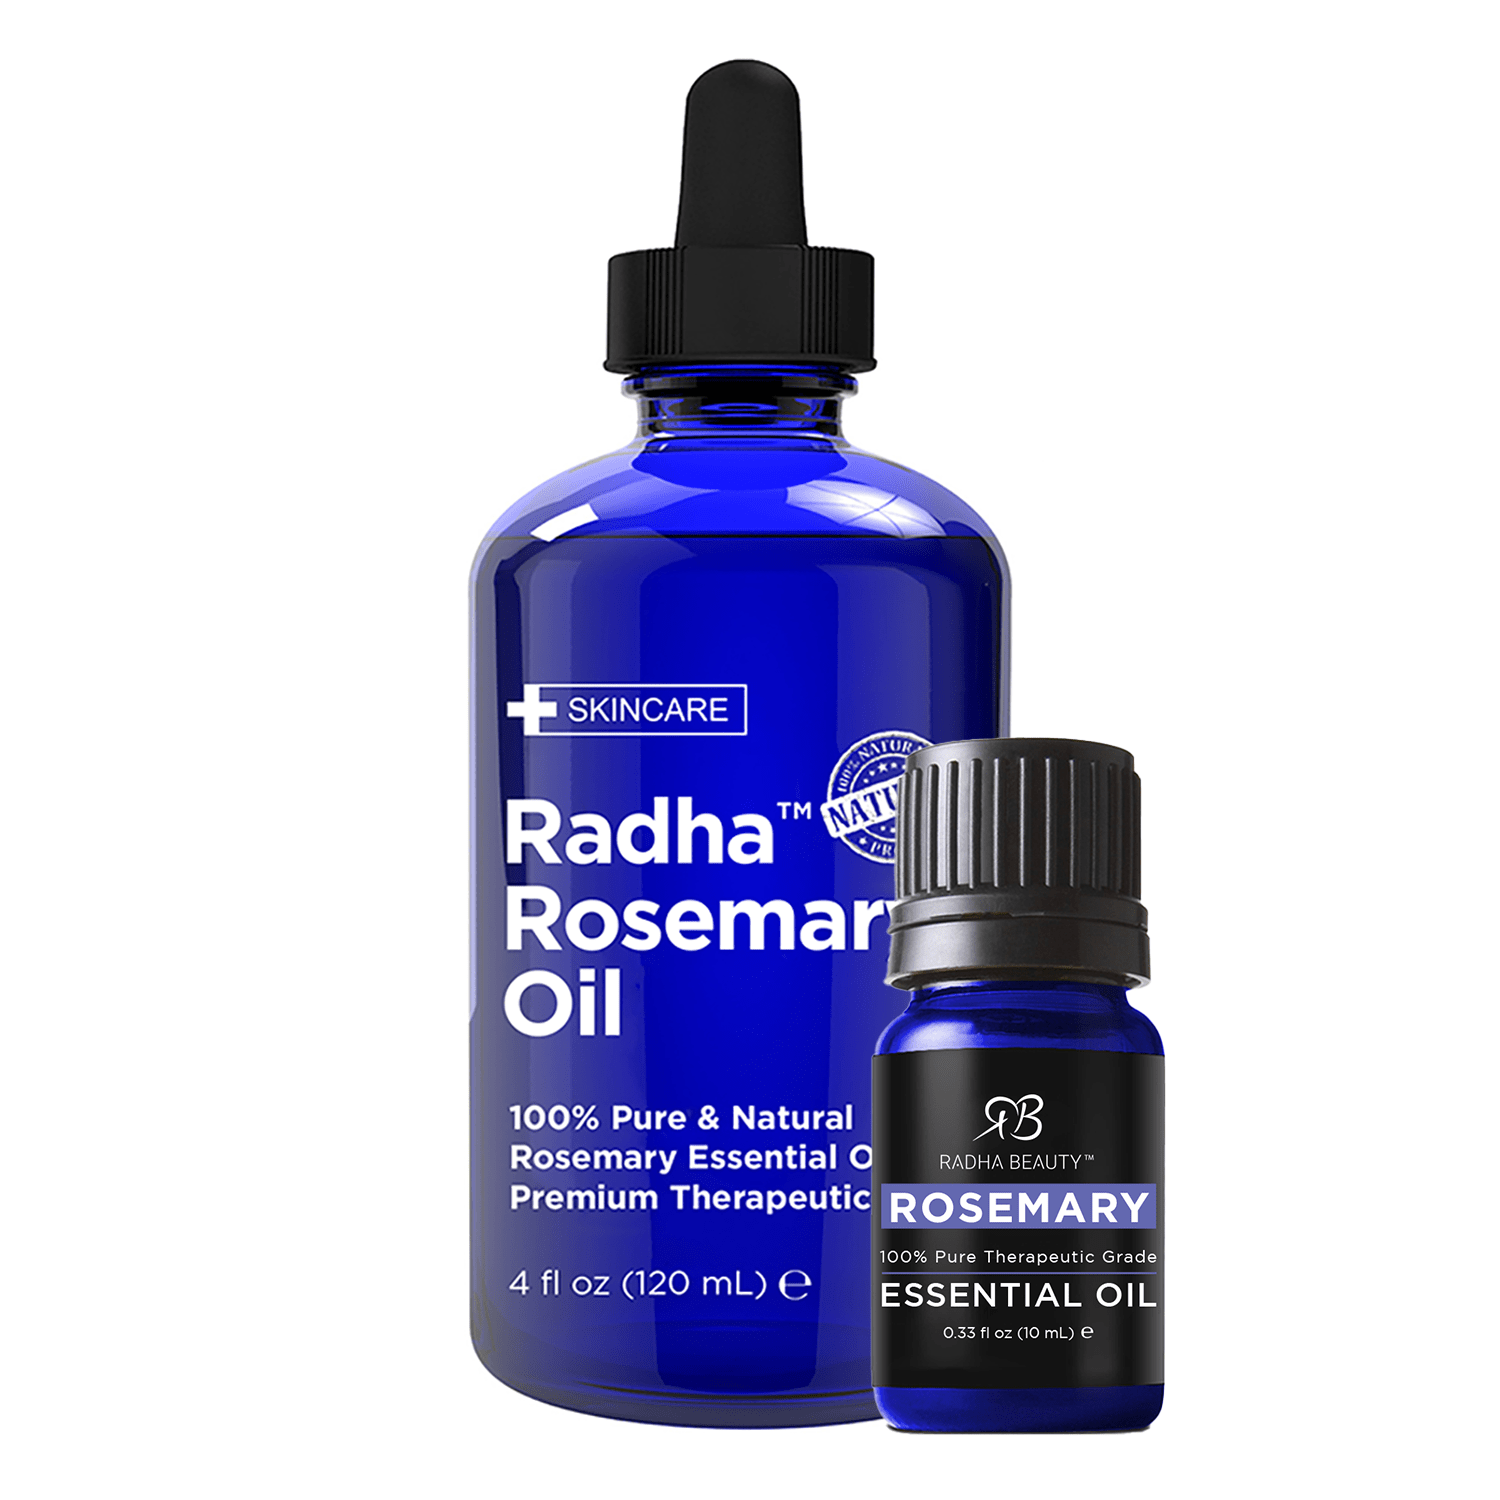 Radha Beauty 100% Pure Rosemary Oil